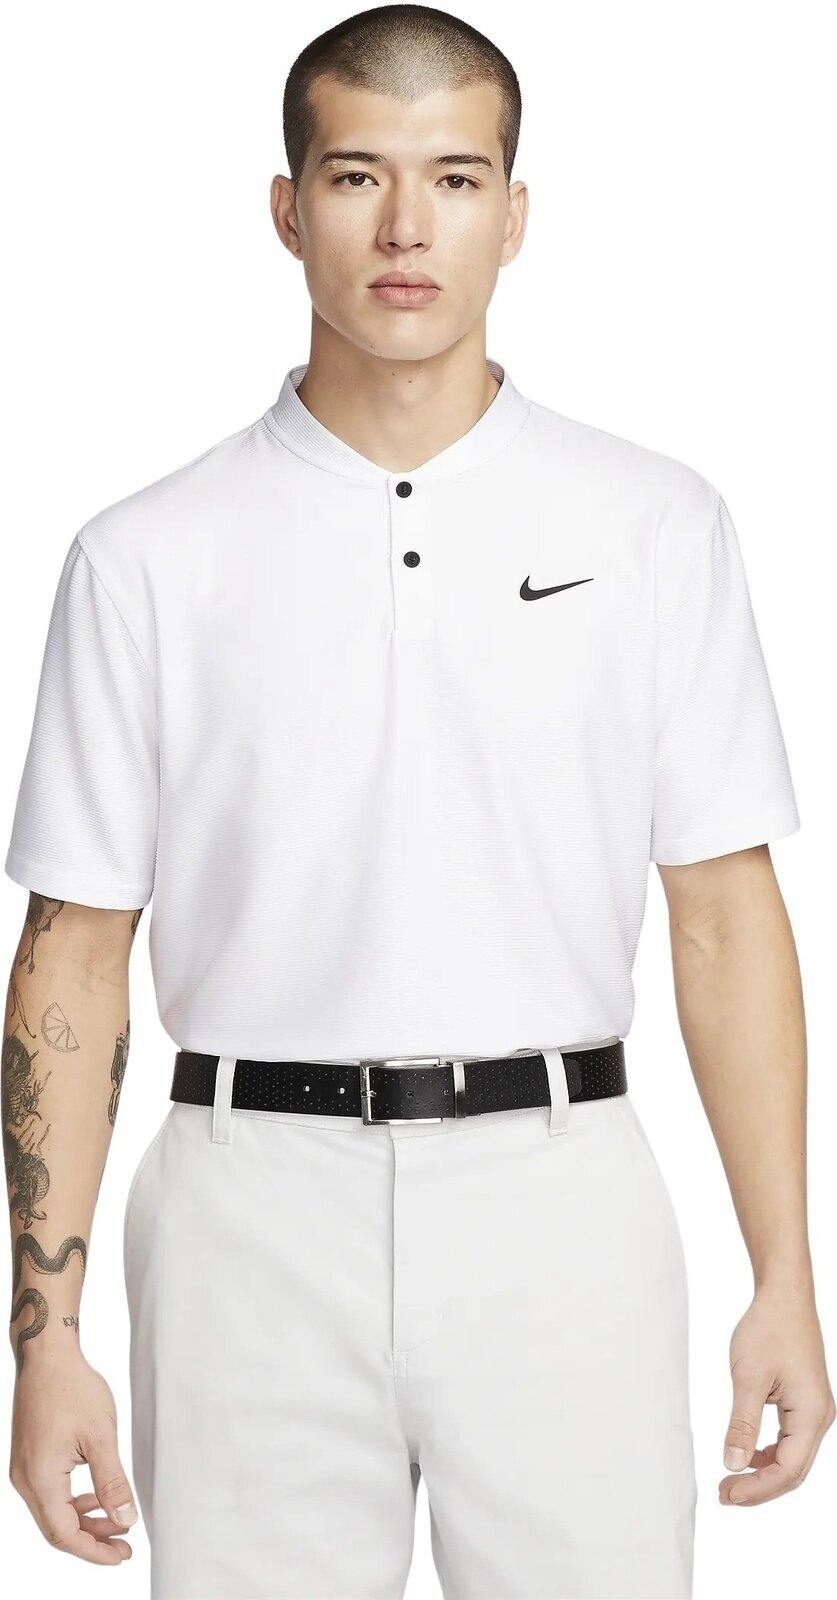 Polo Nike Dri-Fit Victory Texture Mens Polo White/Black M